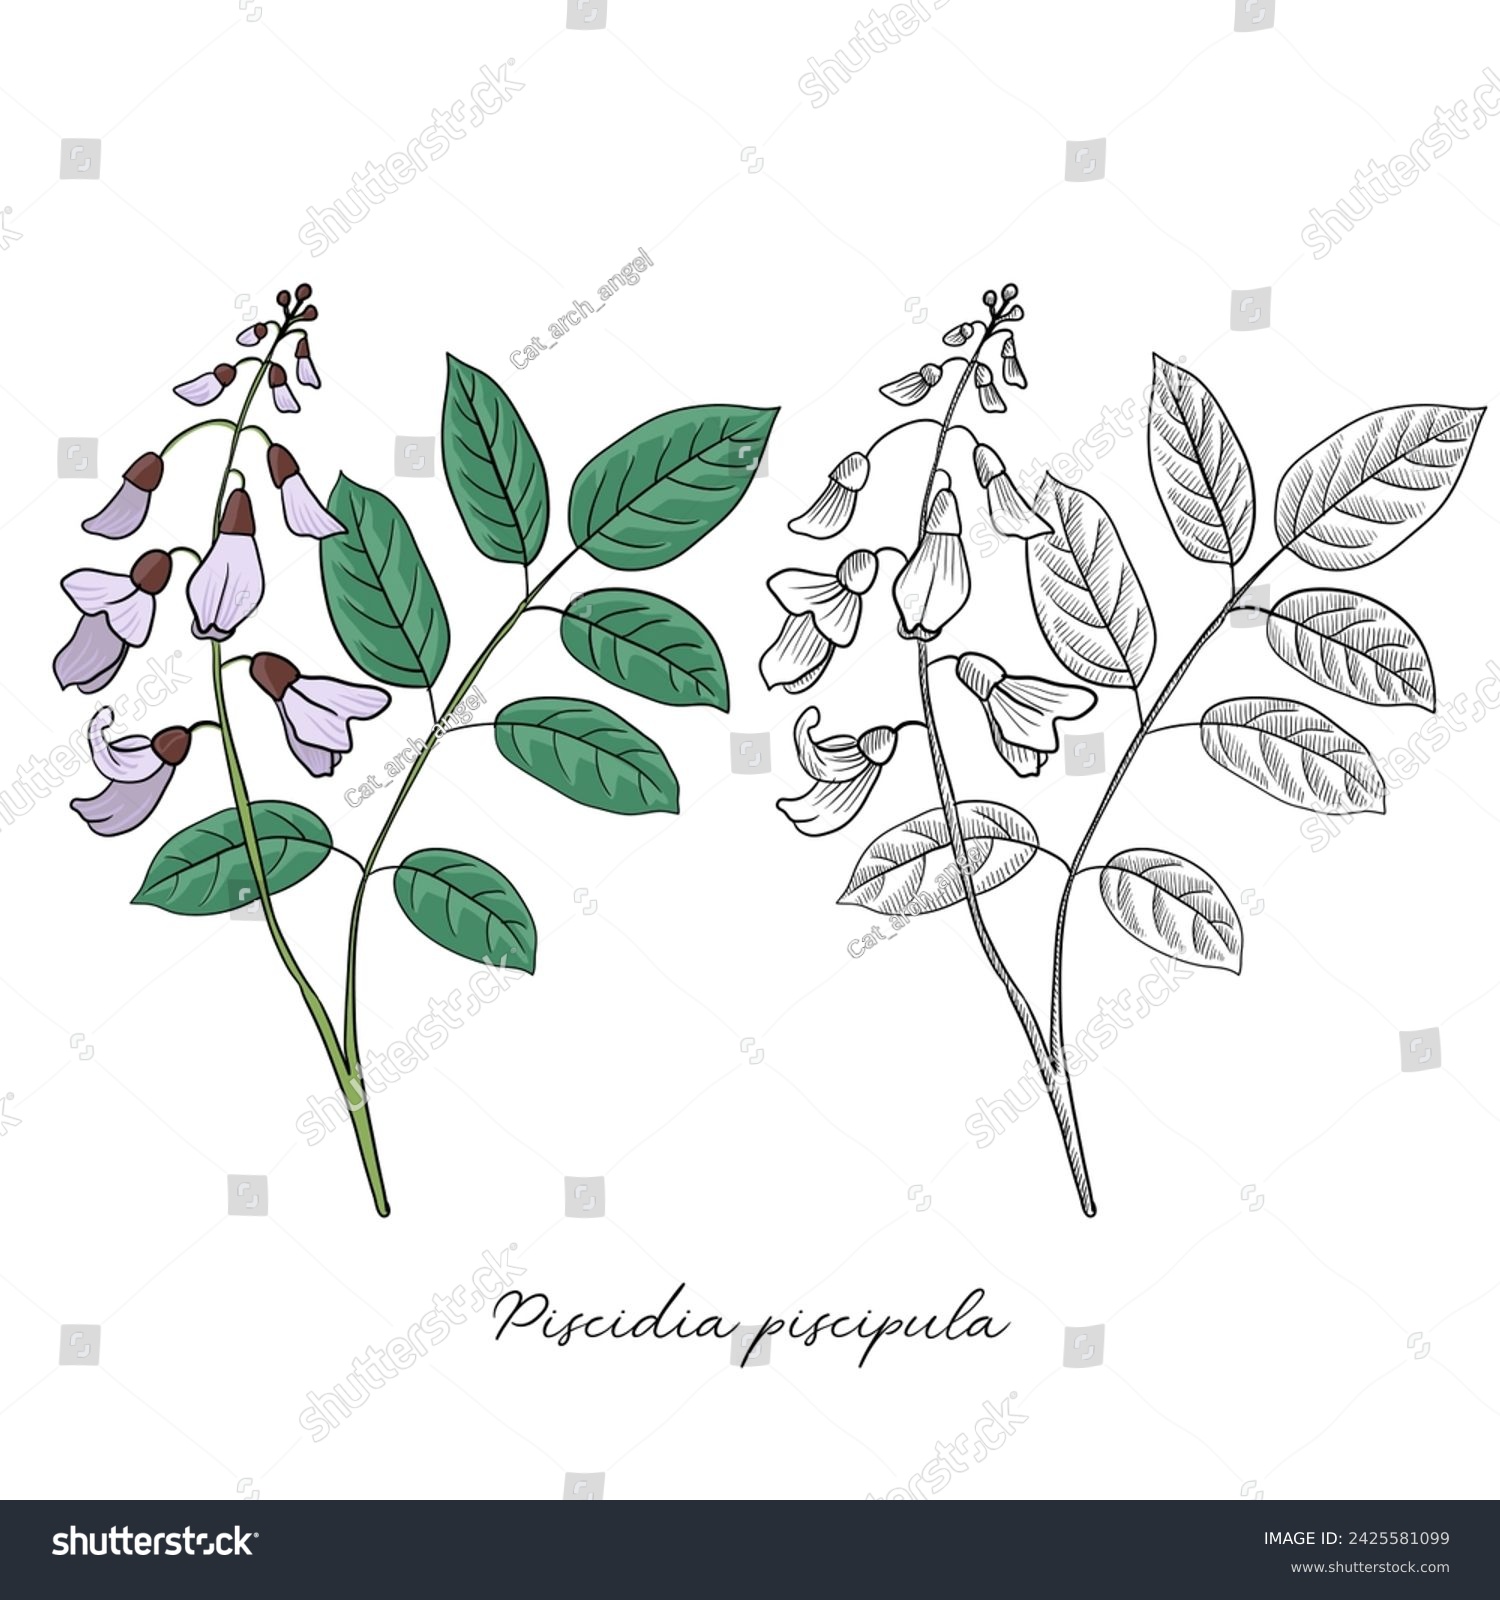 SVG of vector drawing Jamaica dogwood, Piscidia piscipula, Florida fishpoison tree, hand drawn illustration of medicinal plant svg